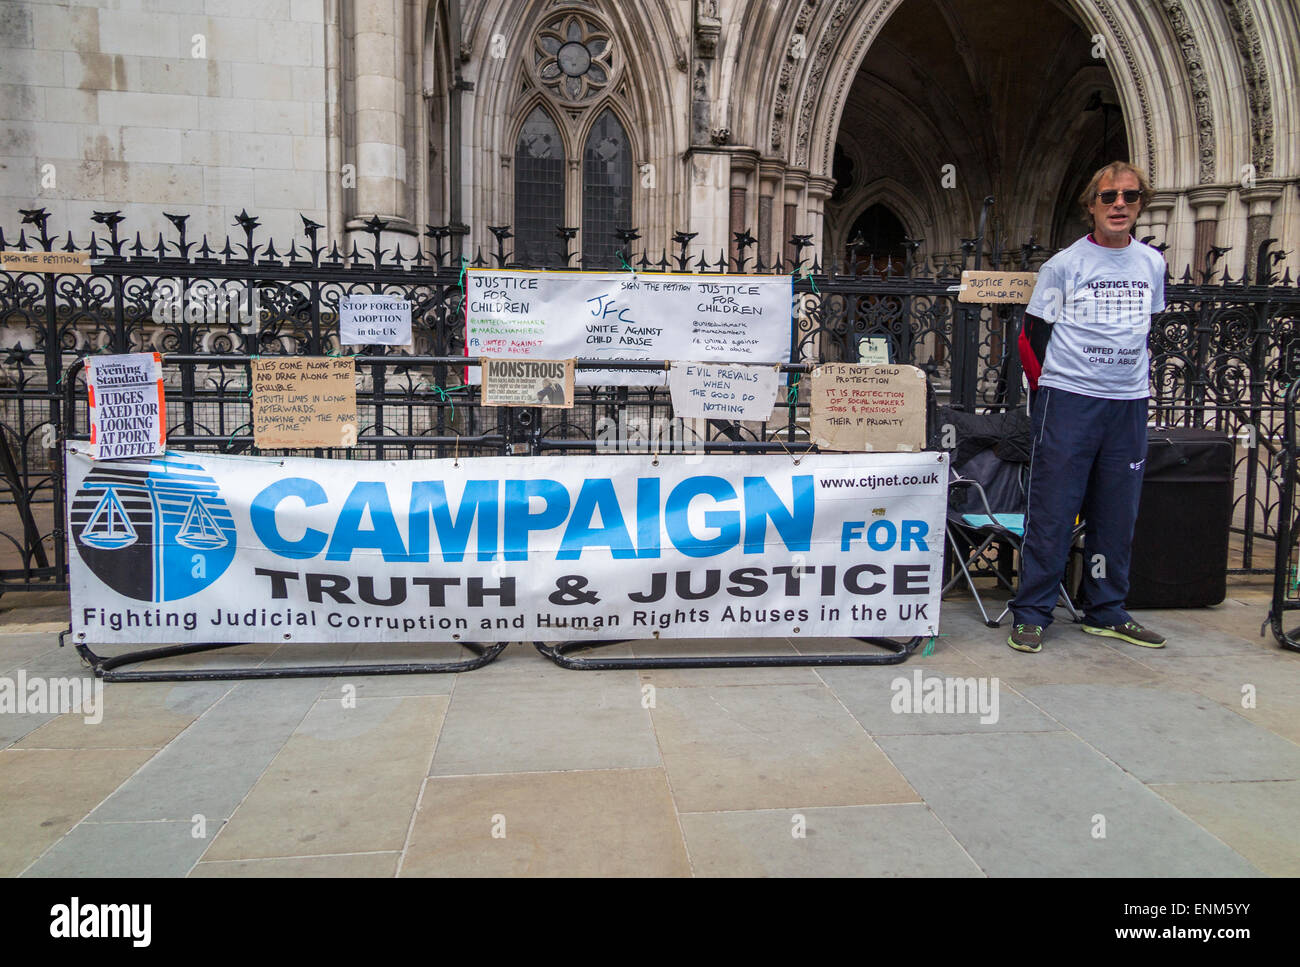 Protest-Banner und Demonstrant außerhalb der Royal Courts of Justice (Justizpalast), Strand, London WC2 Stockfoto